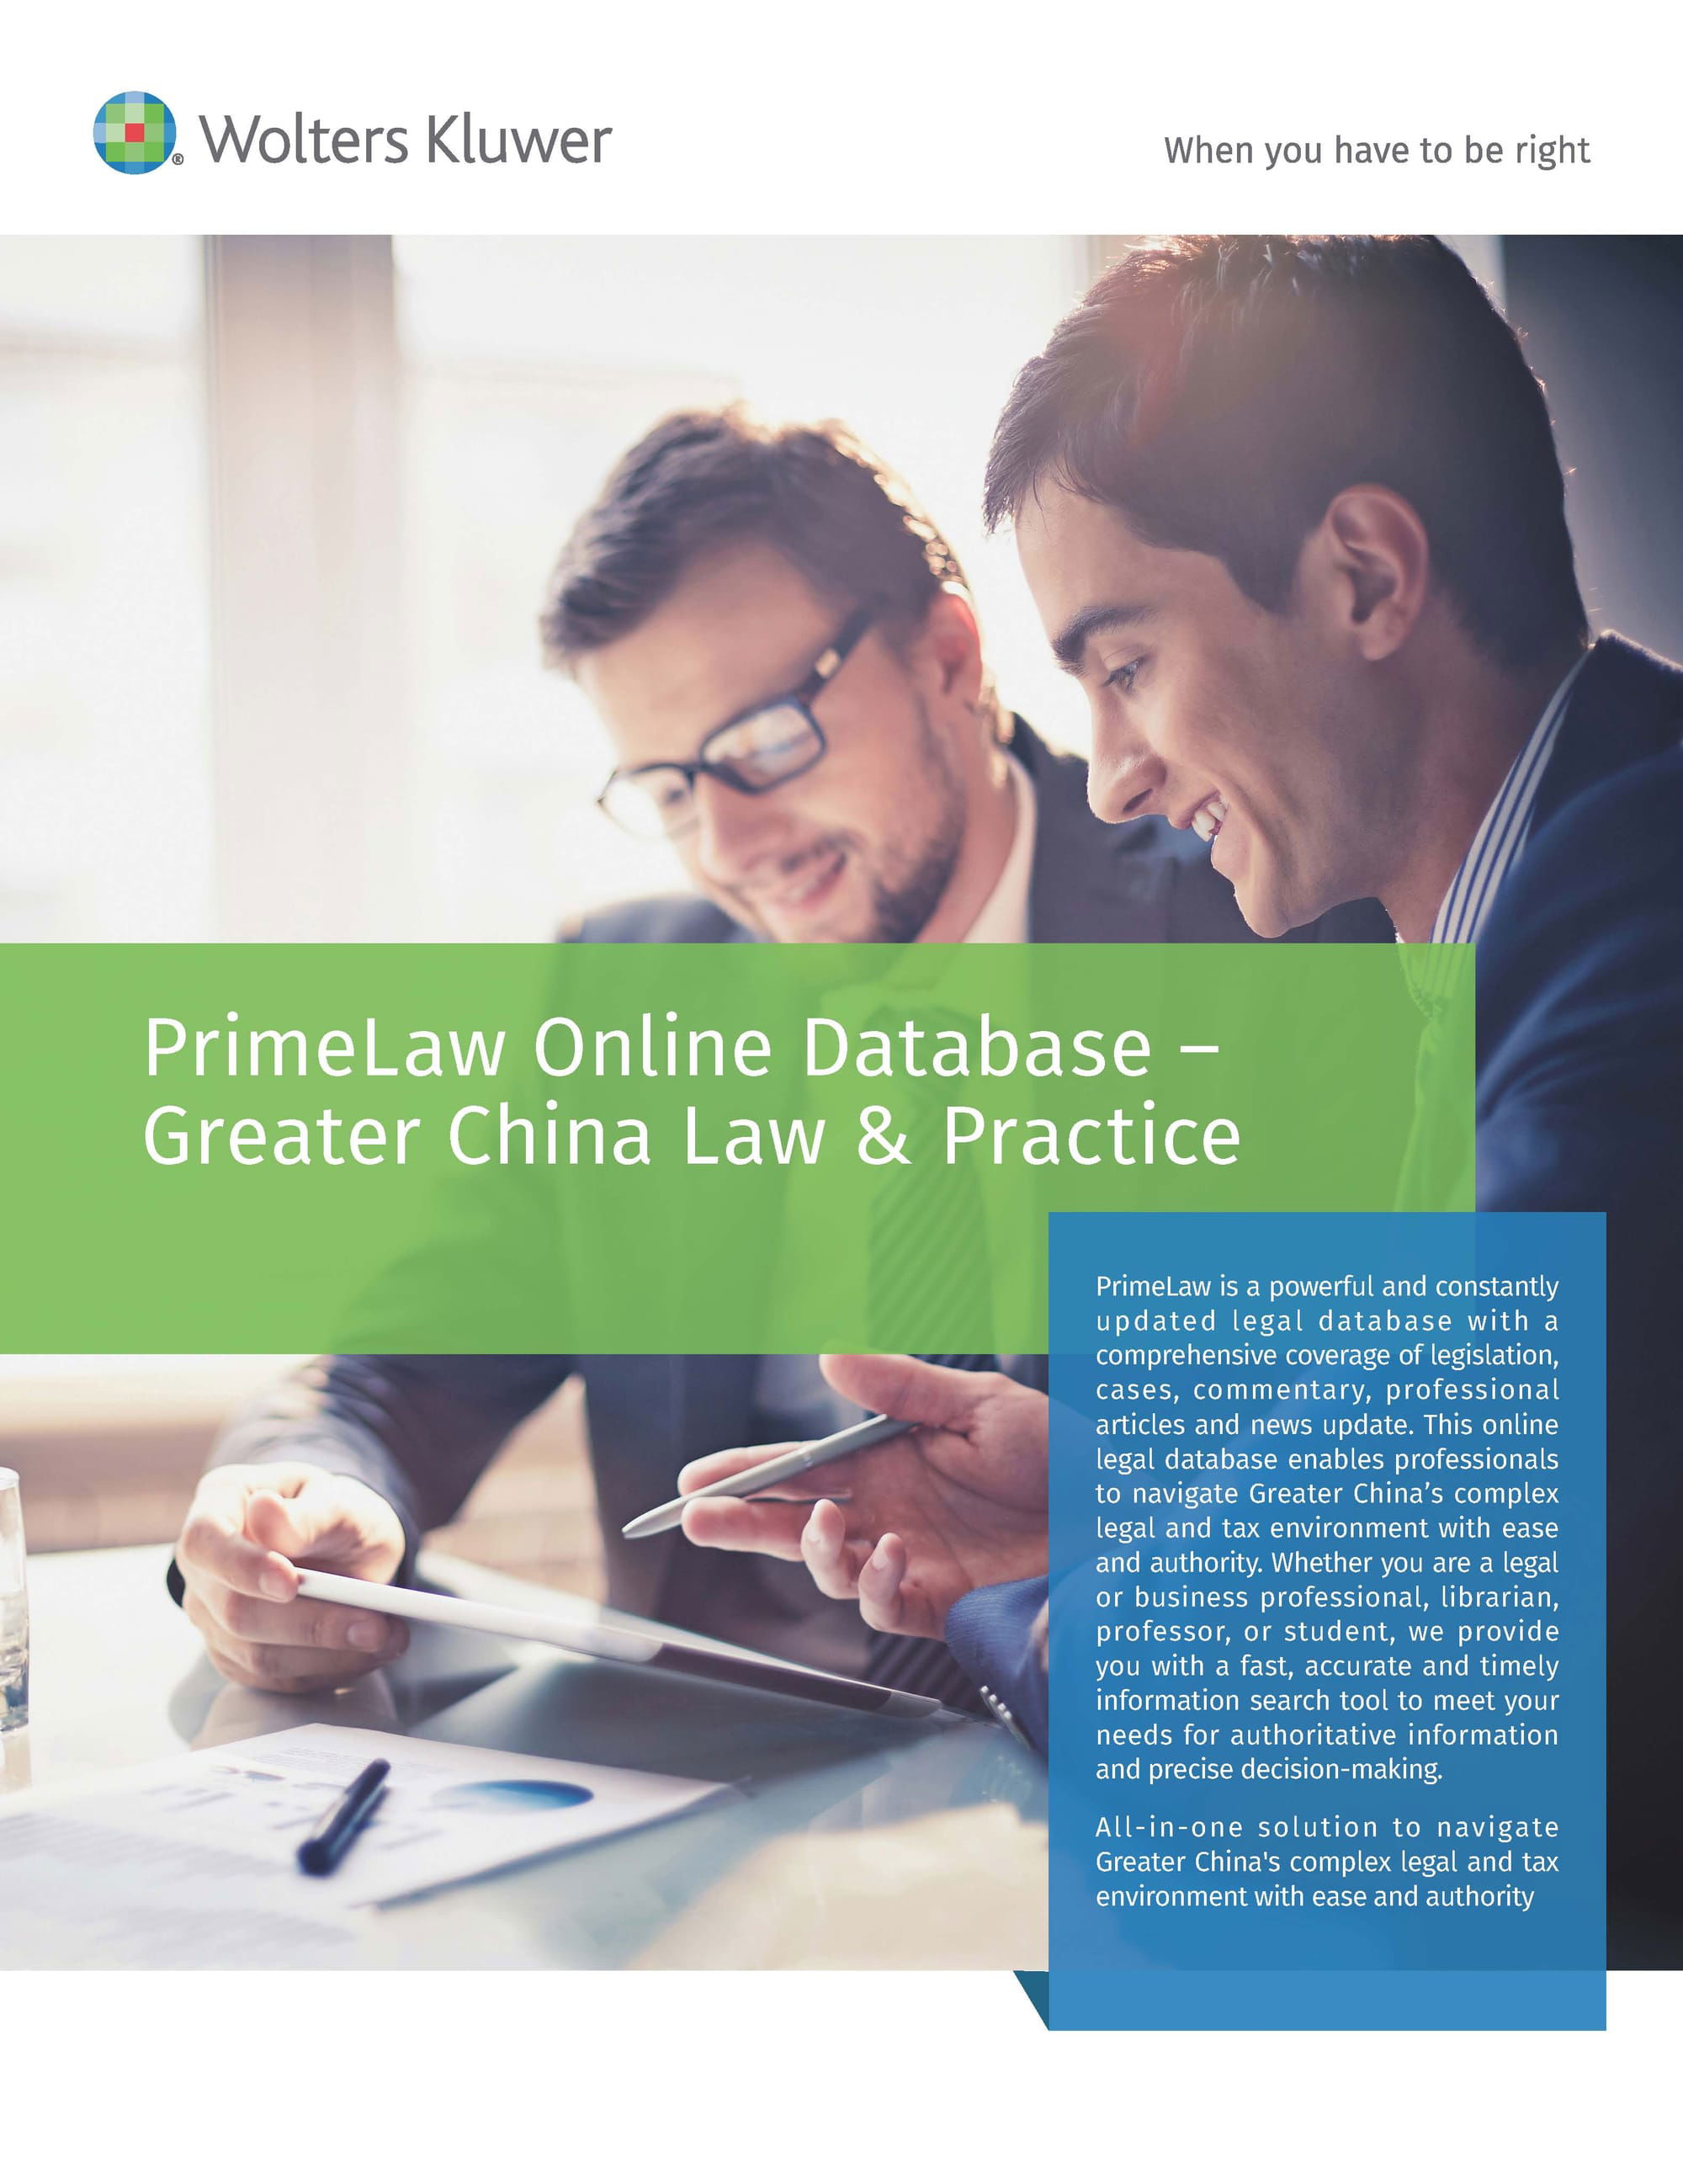 PrimeLaw - Greater China Legal Database